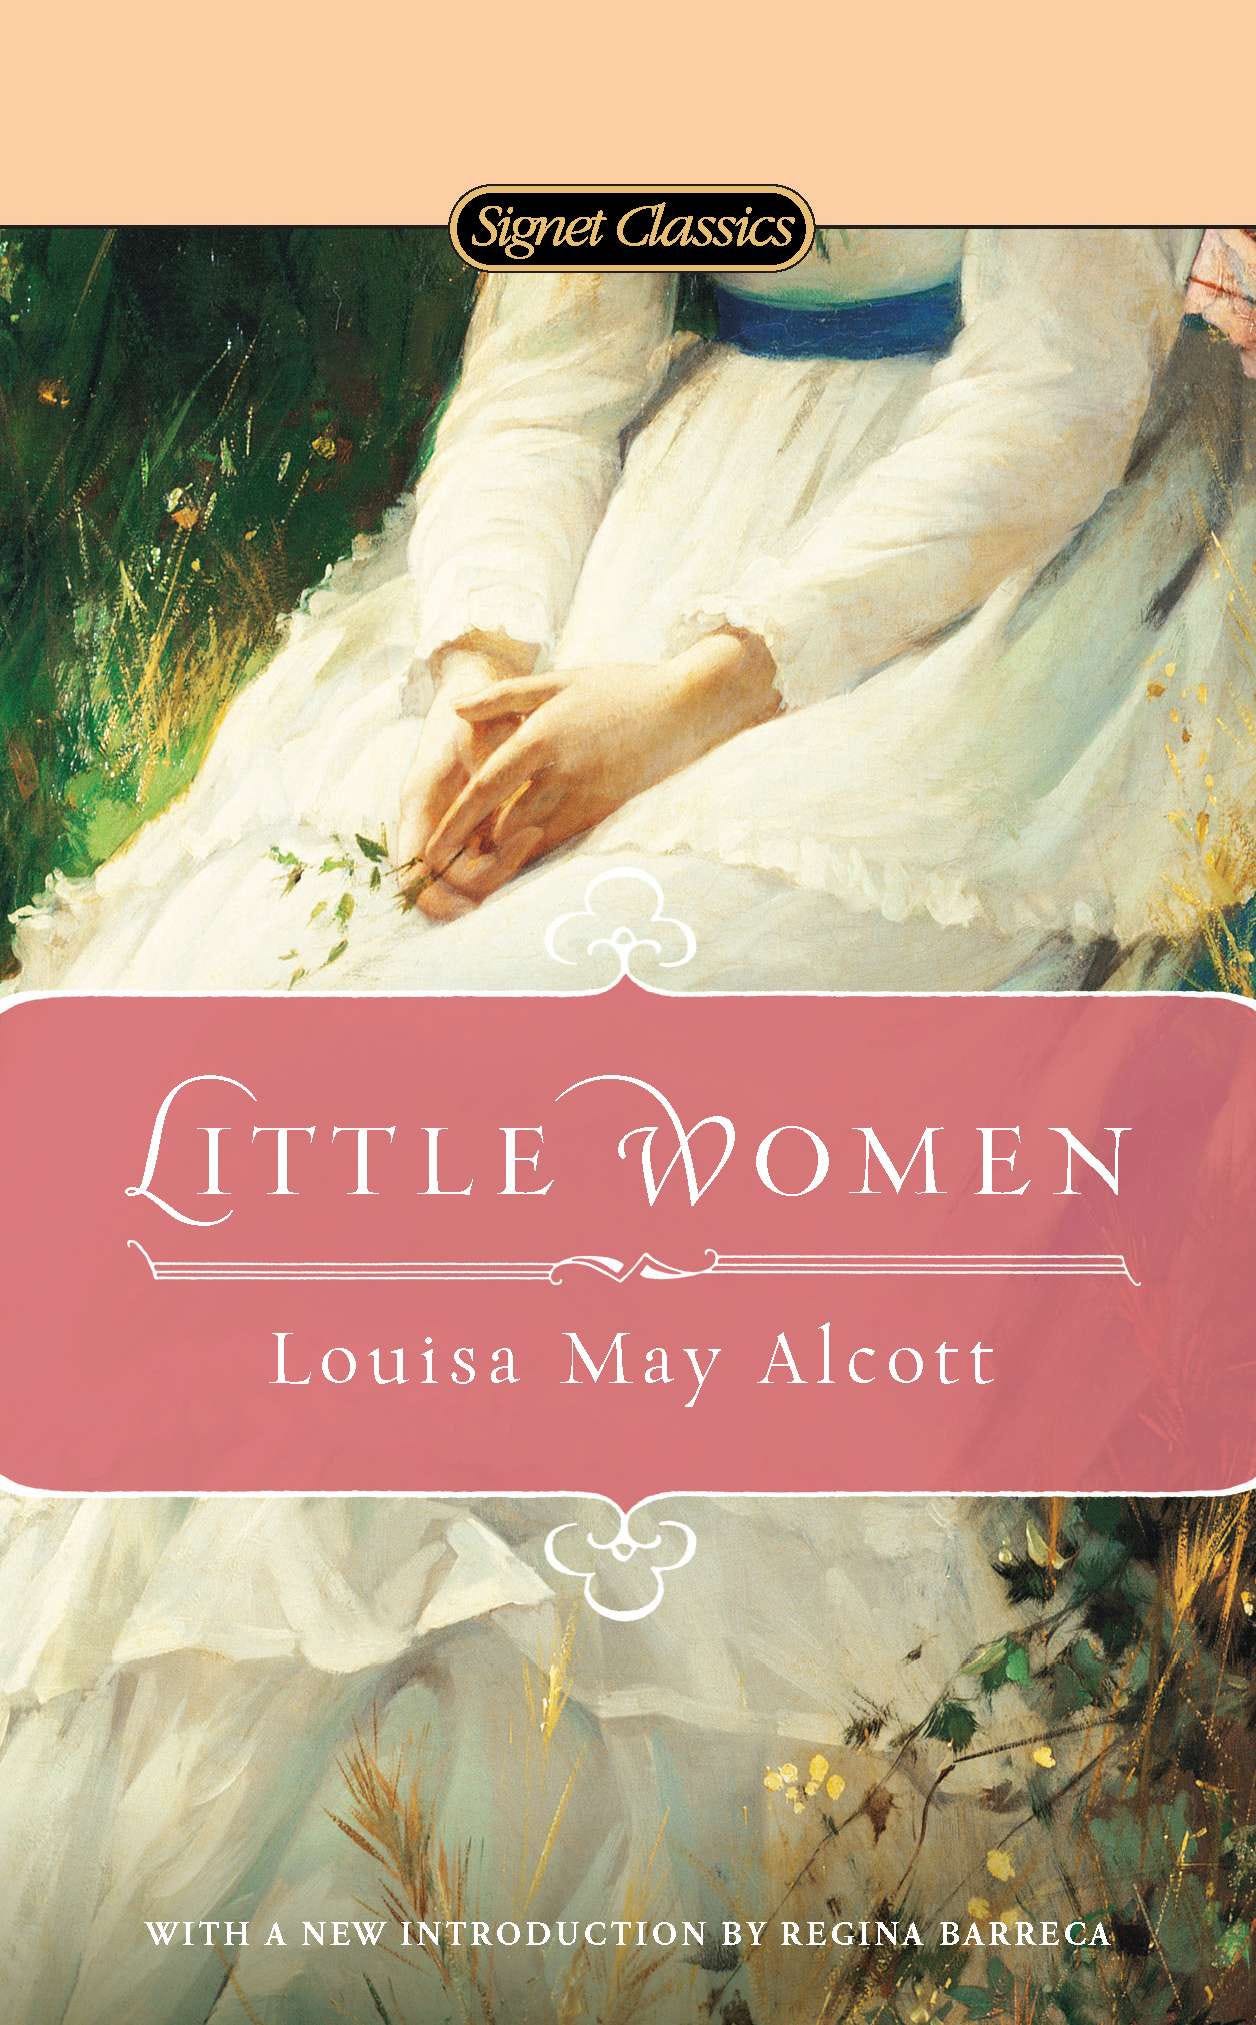 review of little women by louisa may alcott